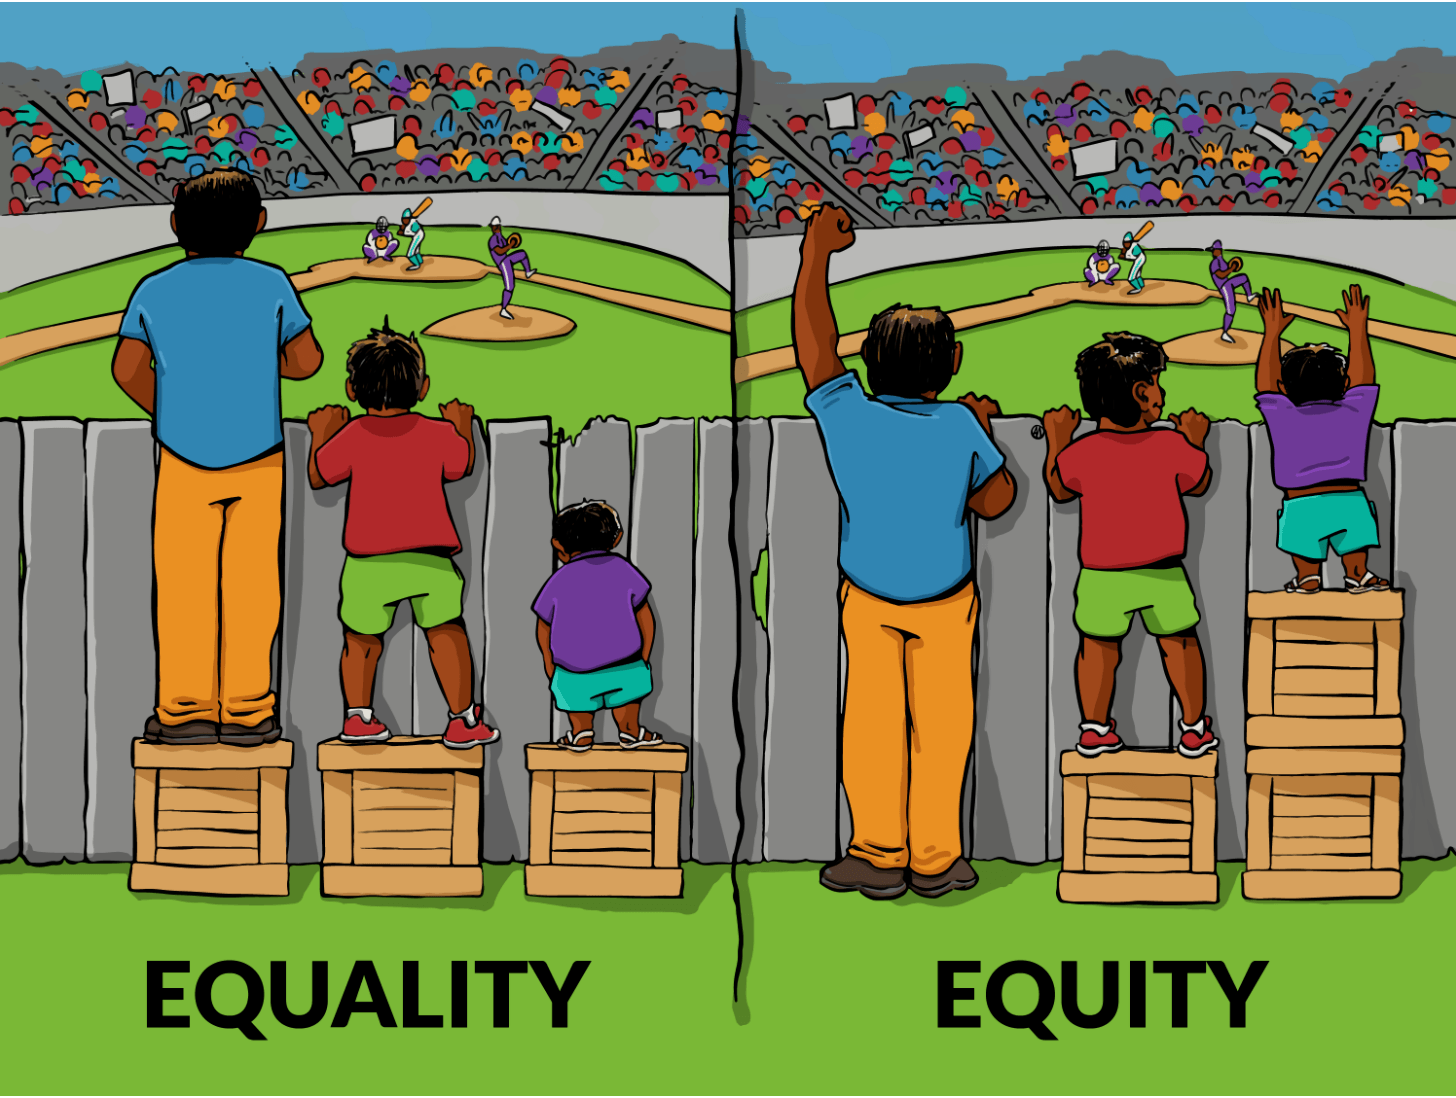 Illustrating Inequality